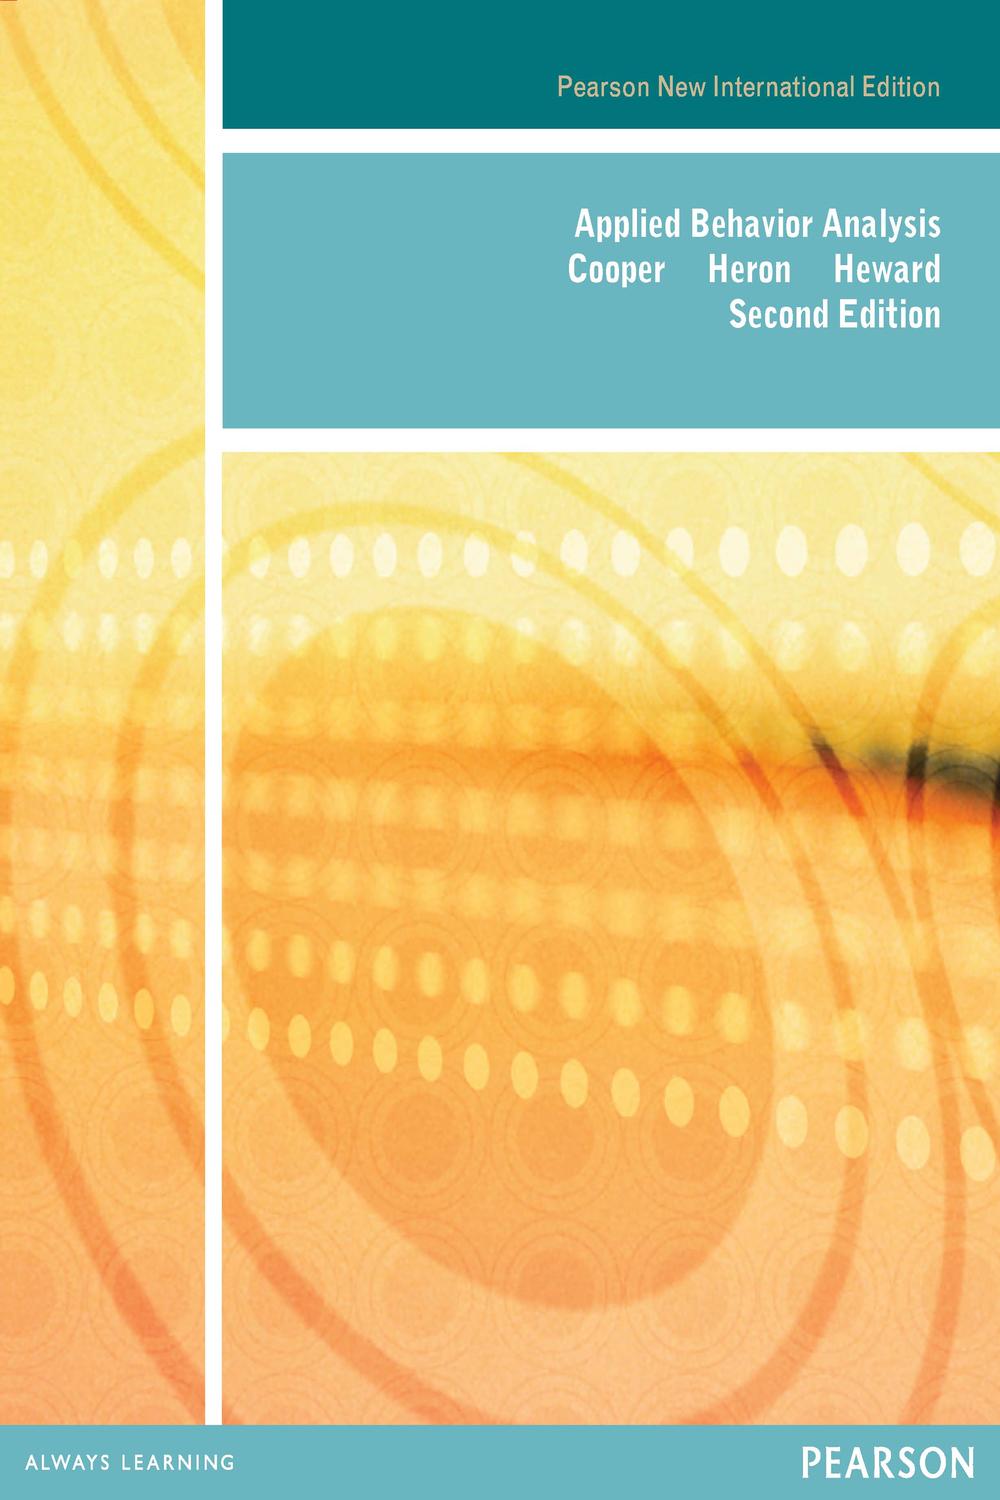 Applied Behavior Analysis: Pearson New International Edition PDF eBook - John Cooper, Timothy Heron, William Heward